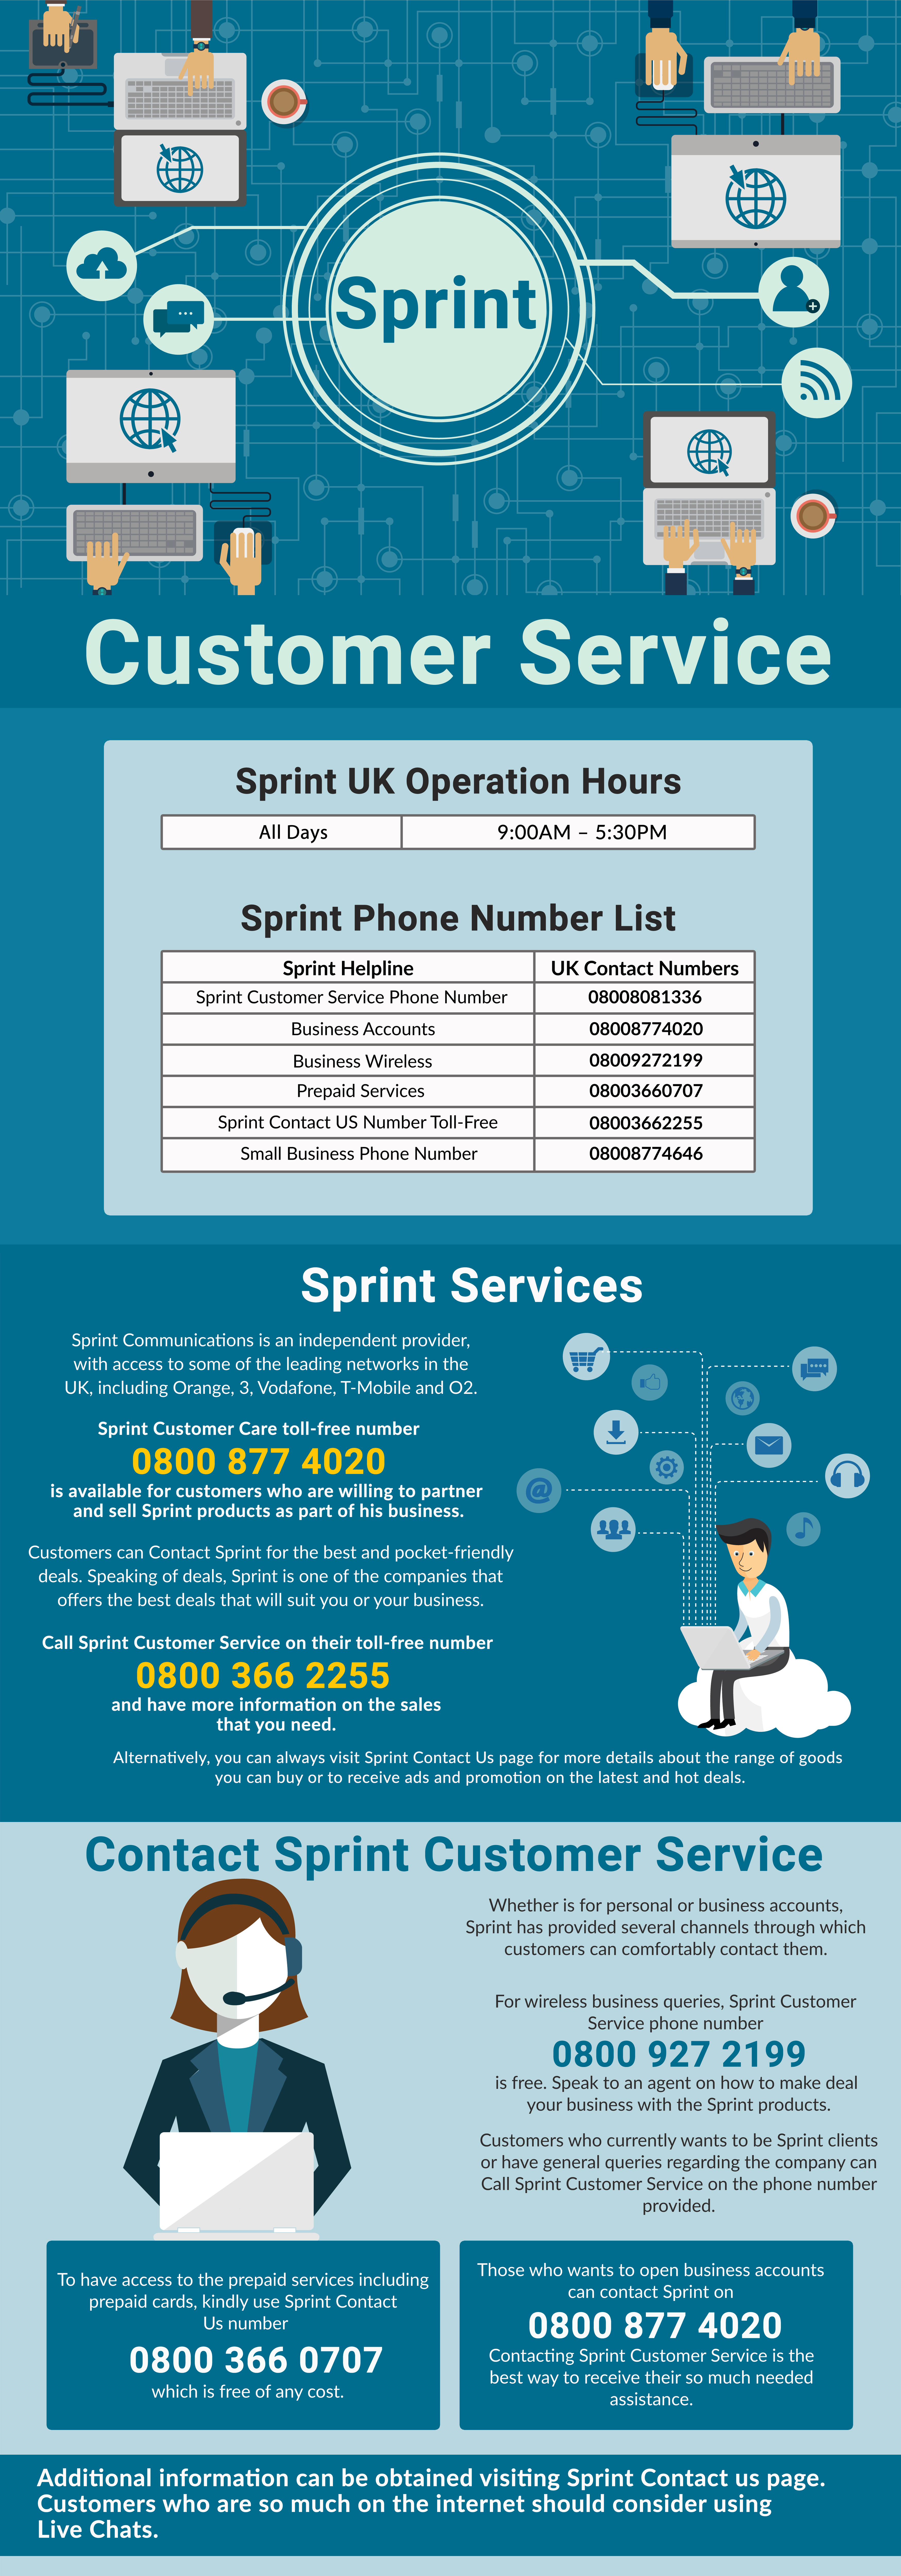 Sprint Helpline